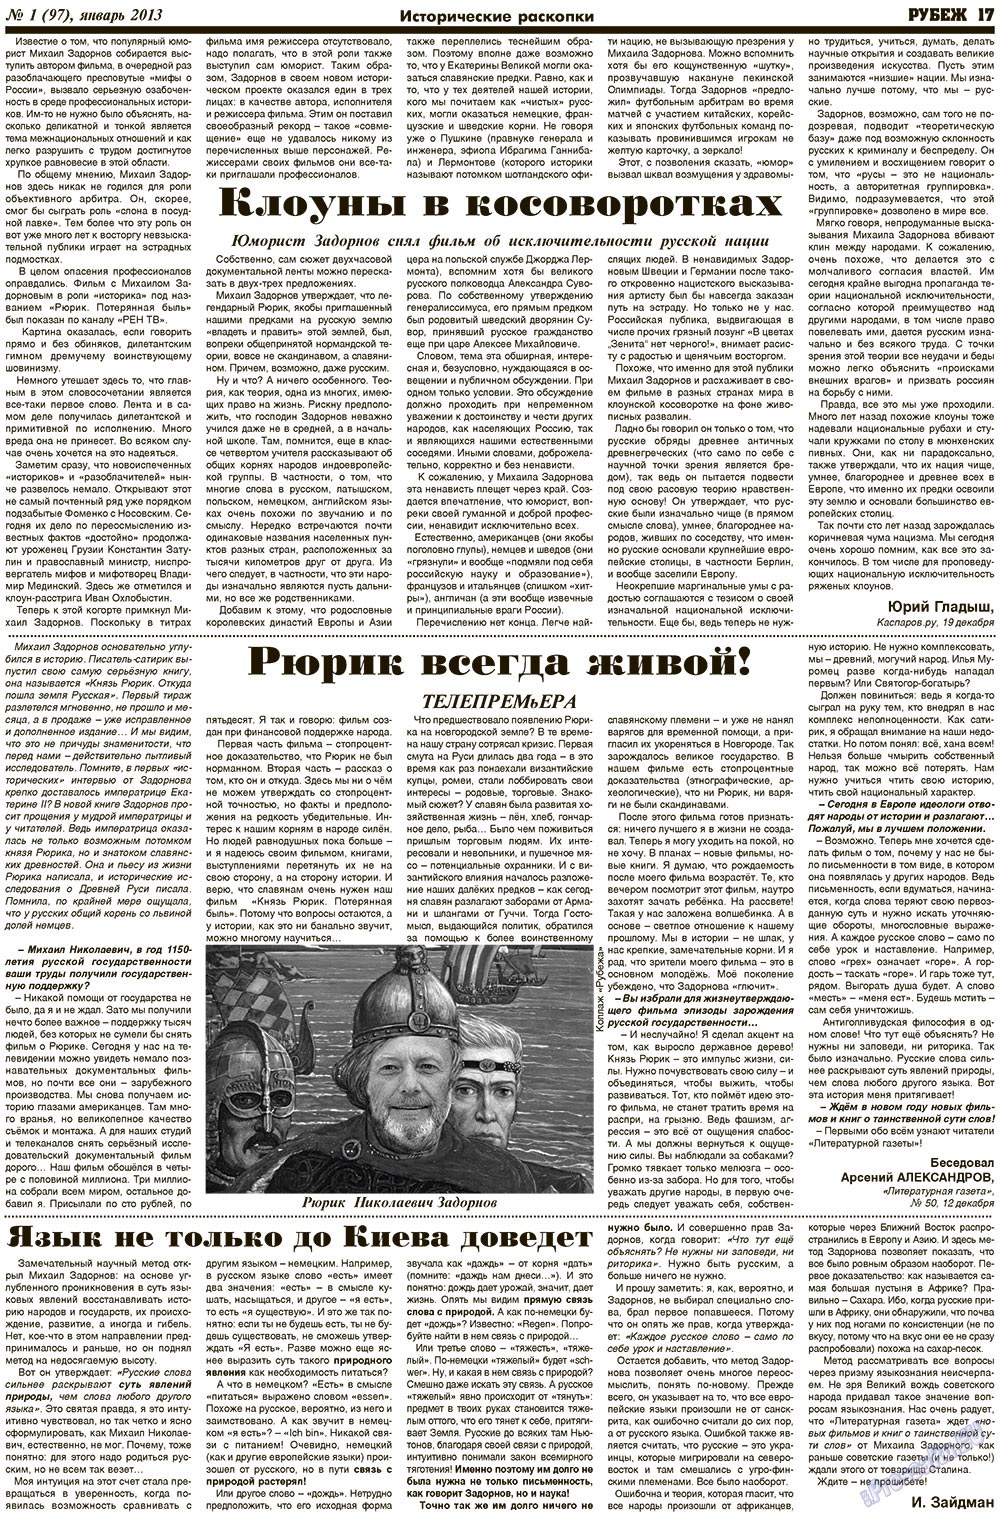 Рубеж, газета. 2013 №1 стр.17